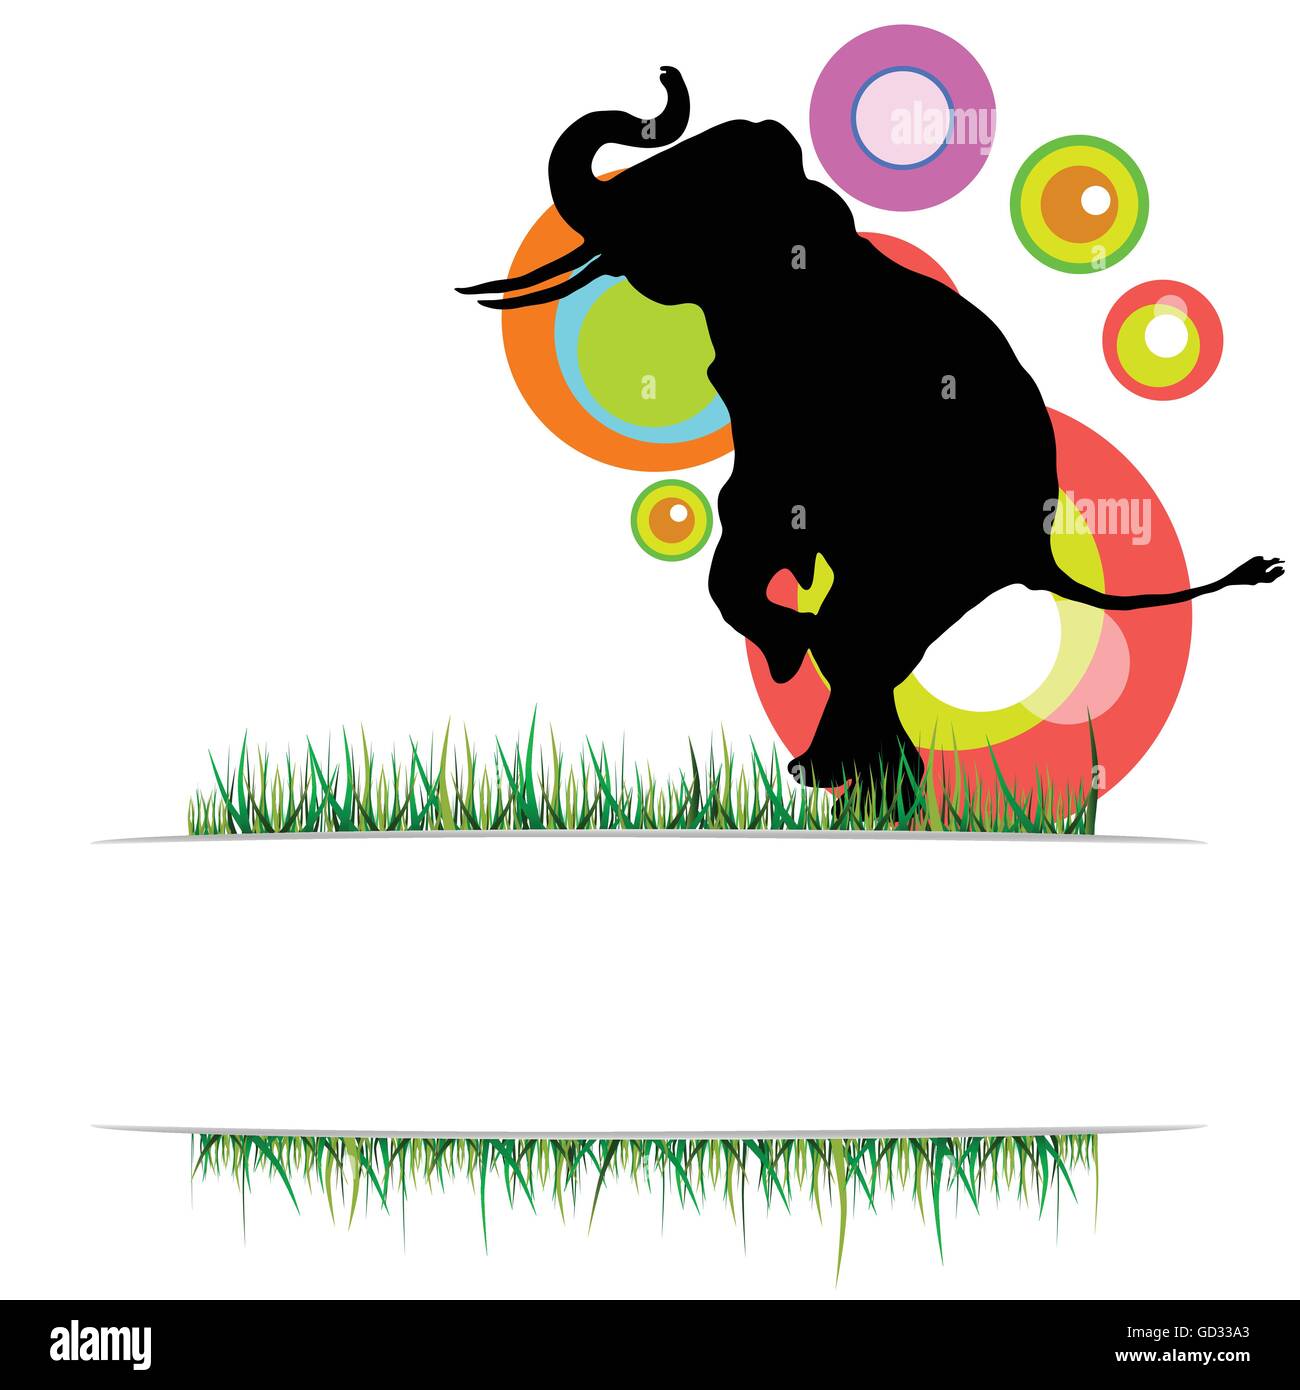 Elefant im Natur-Vektor-Illustration auf eine Farbe Stock Vektor